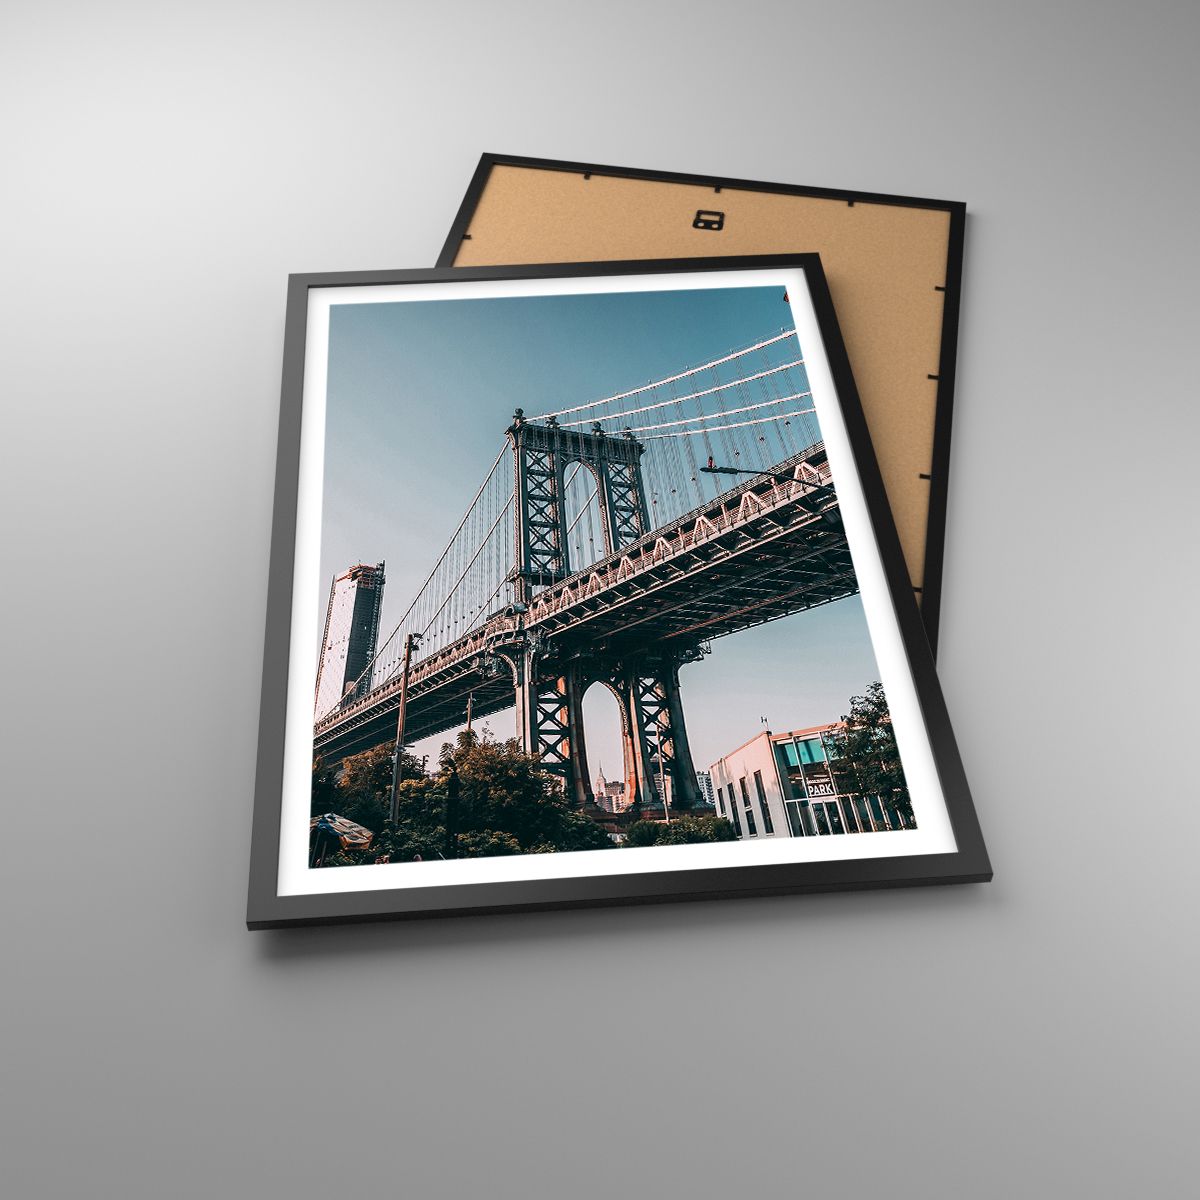 Poster New York, Poster Ponte Di Brooklyn, Poster Architettura, Poster Città, Poster Viaggi